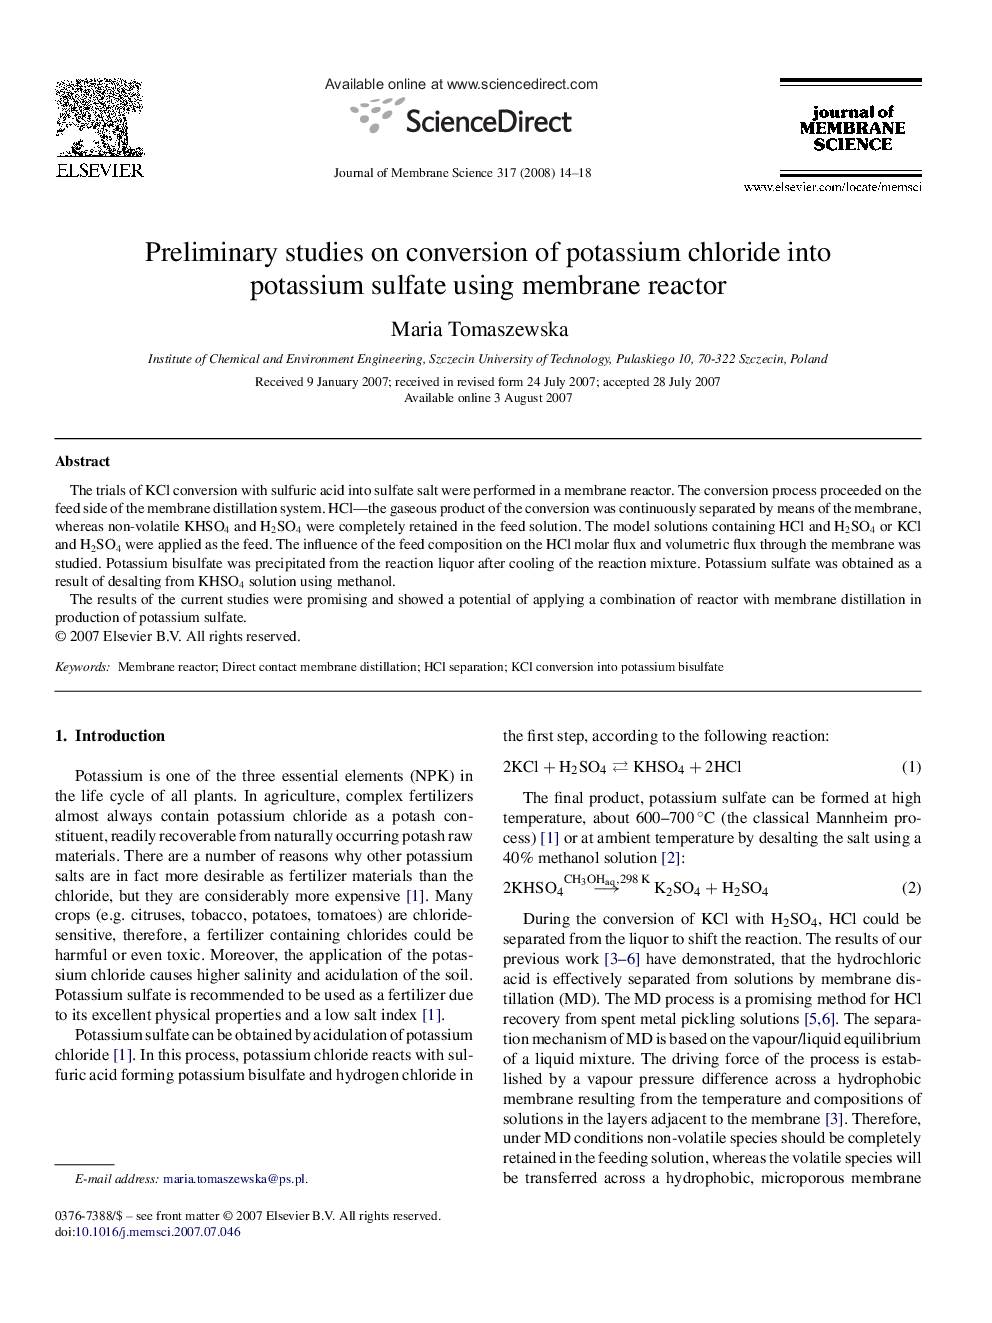 Preliminary studies on conversion of potassium chloride into potassium sulfate using membrane reactor